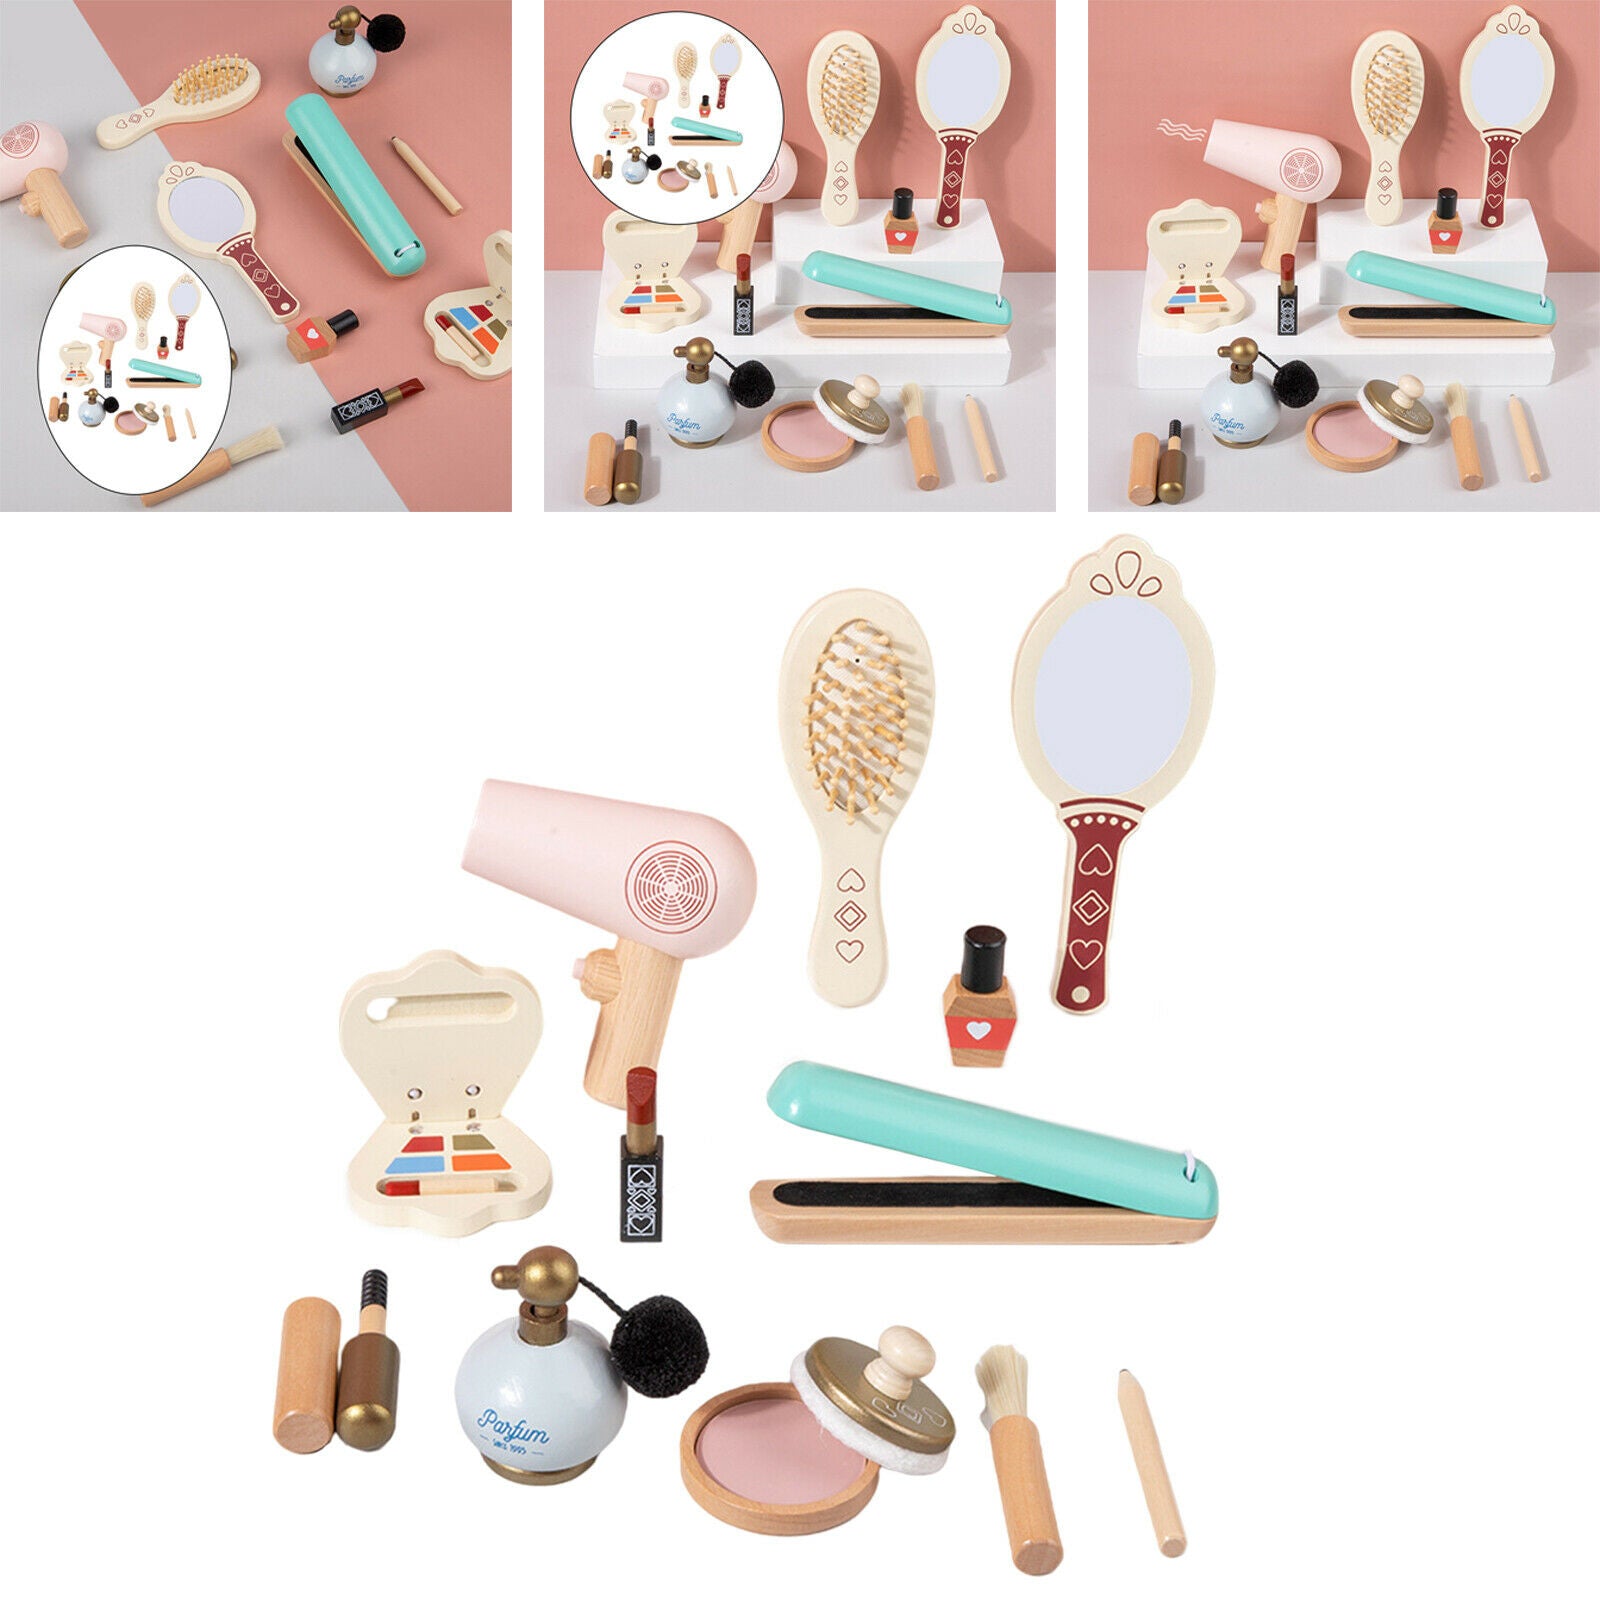 12pcs Kids Makeup Kit Brush Nail Polish Mirror for Girls Age 3, 4, 5,6